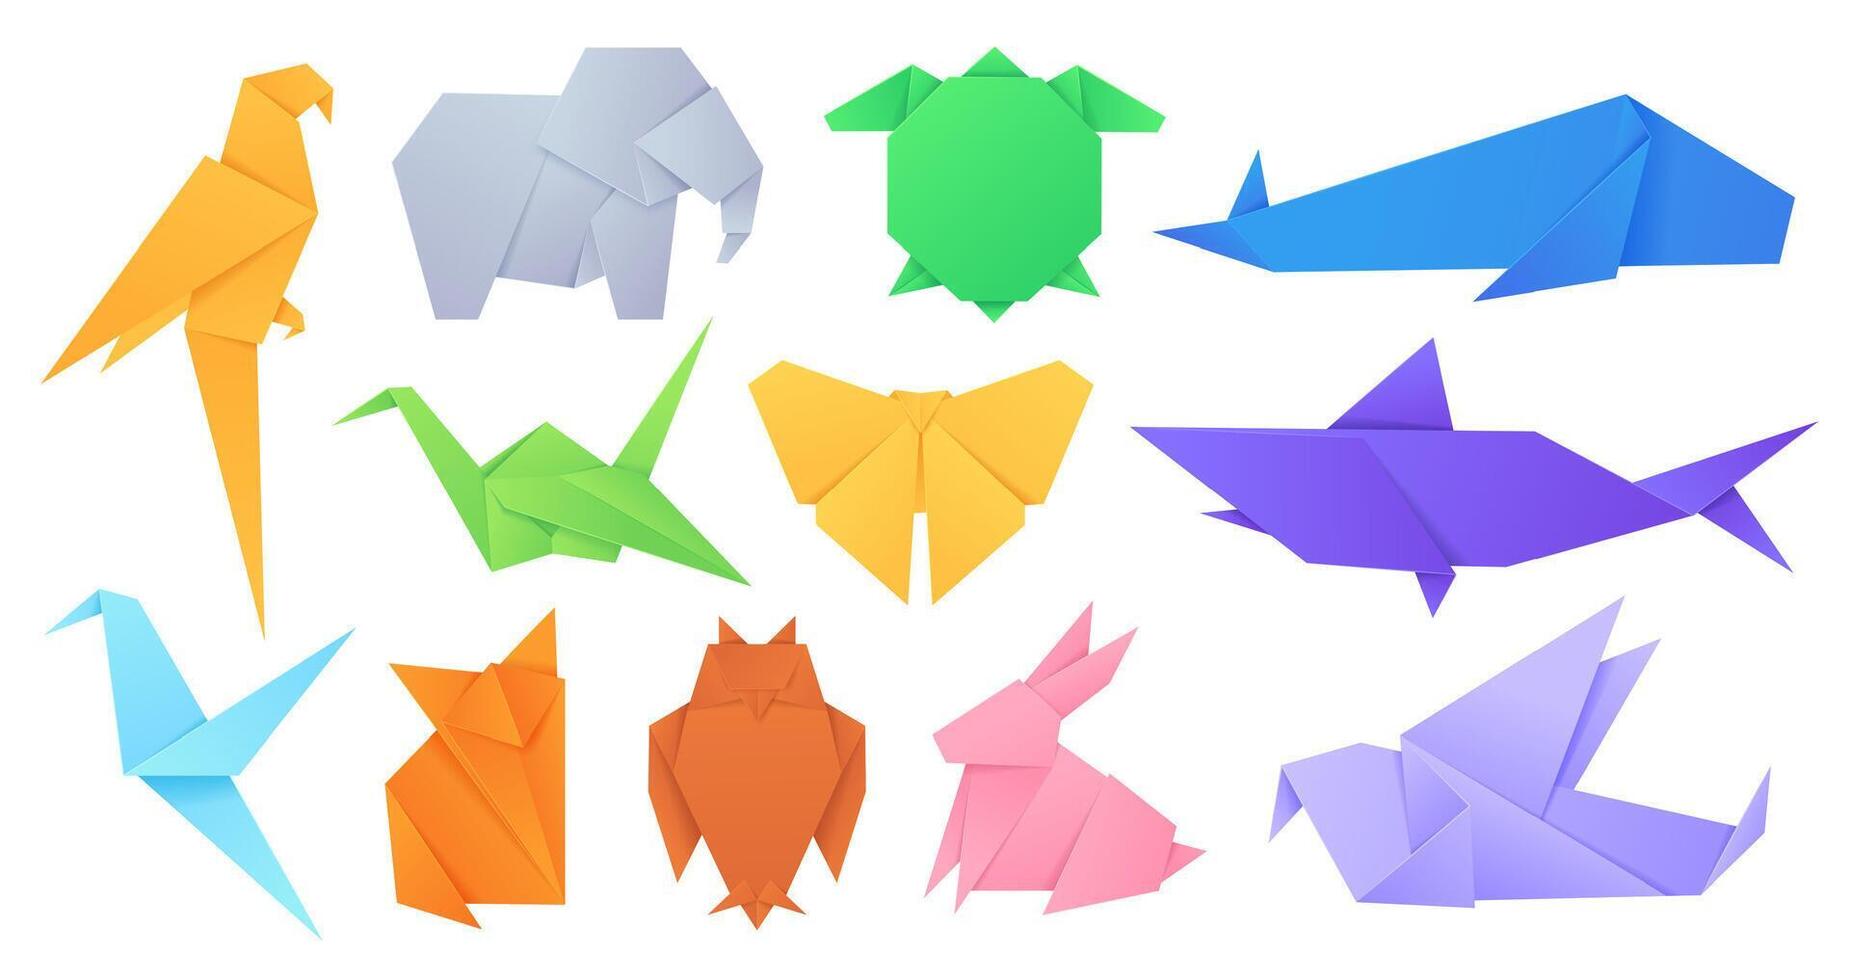 papier dieren. Japans origami gevouwen speelgoed vogels, vos, vlinder, papegaai en haas. tekenfilm meetkundig wild dier vormig figuren vector reeks